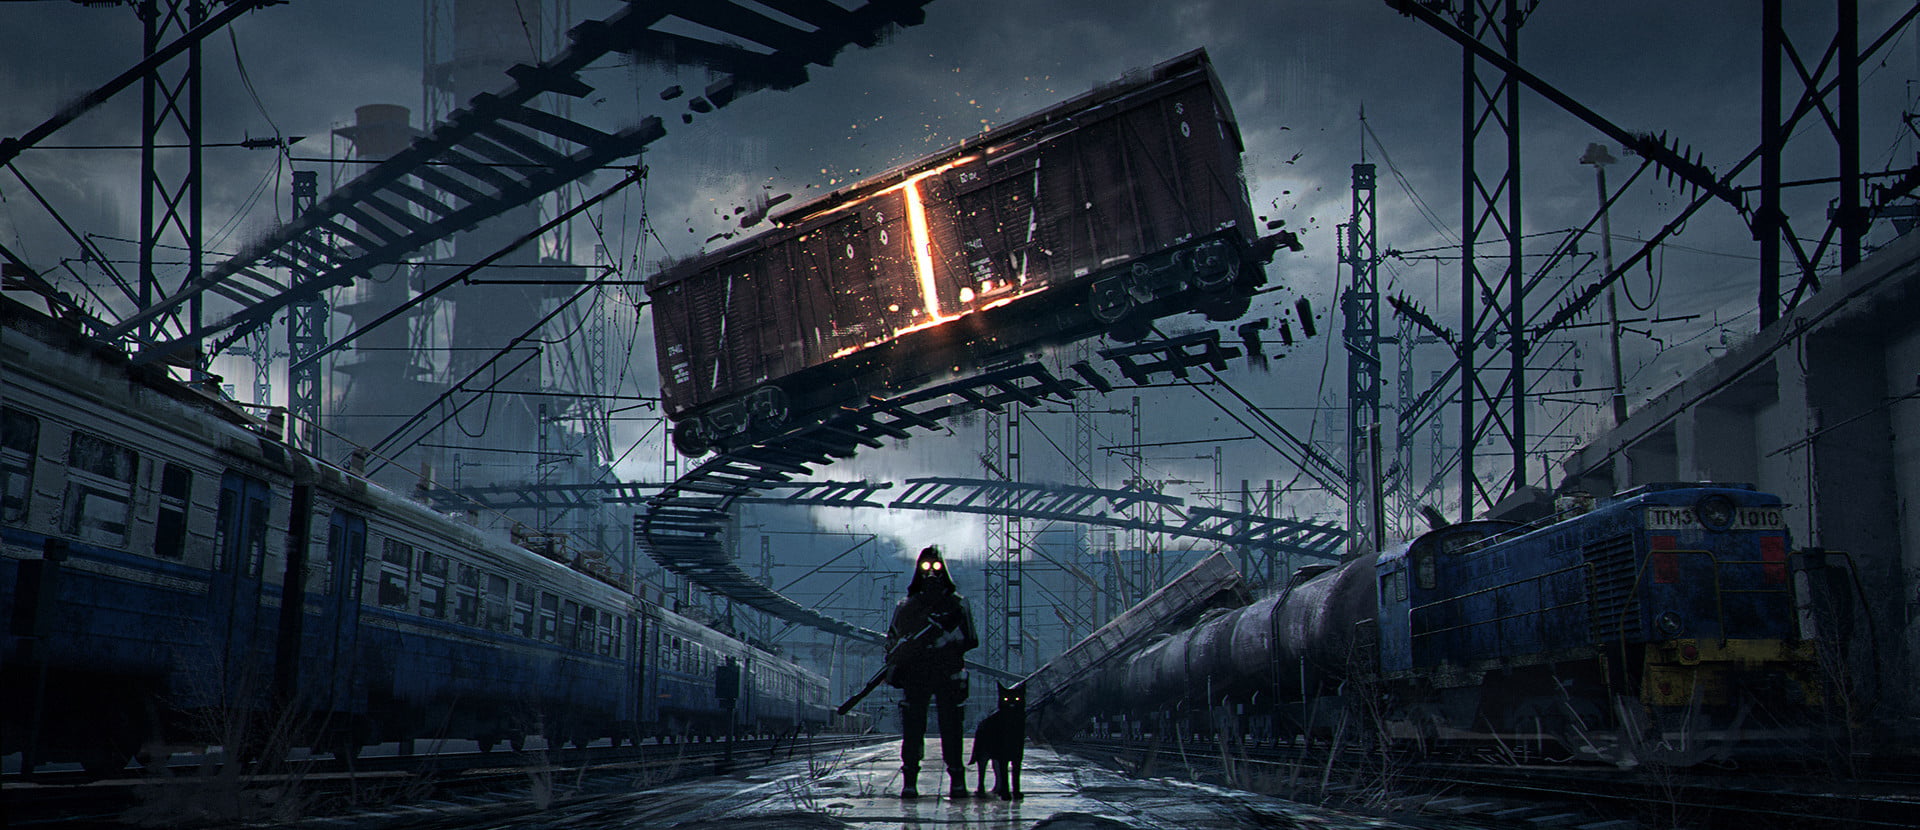 concept art, artwork, science fiction, apocalyptic, railway